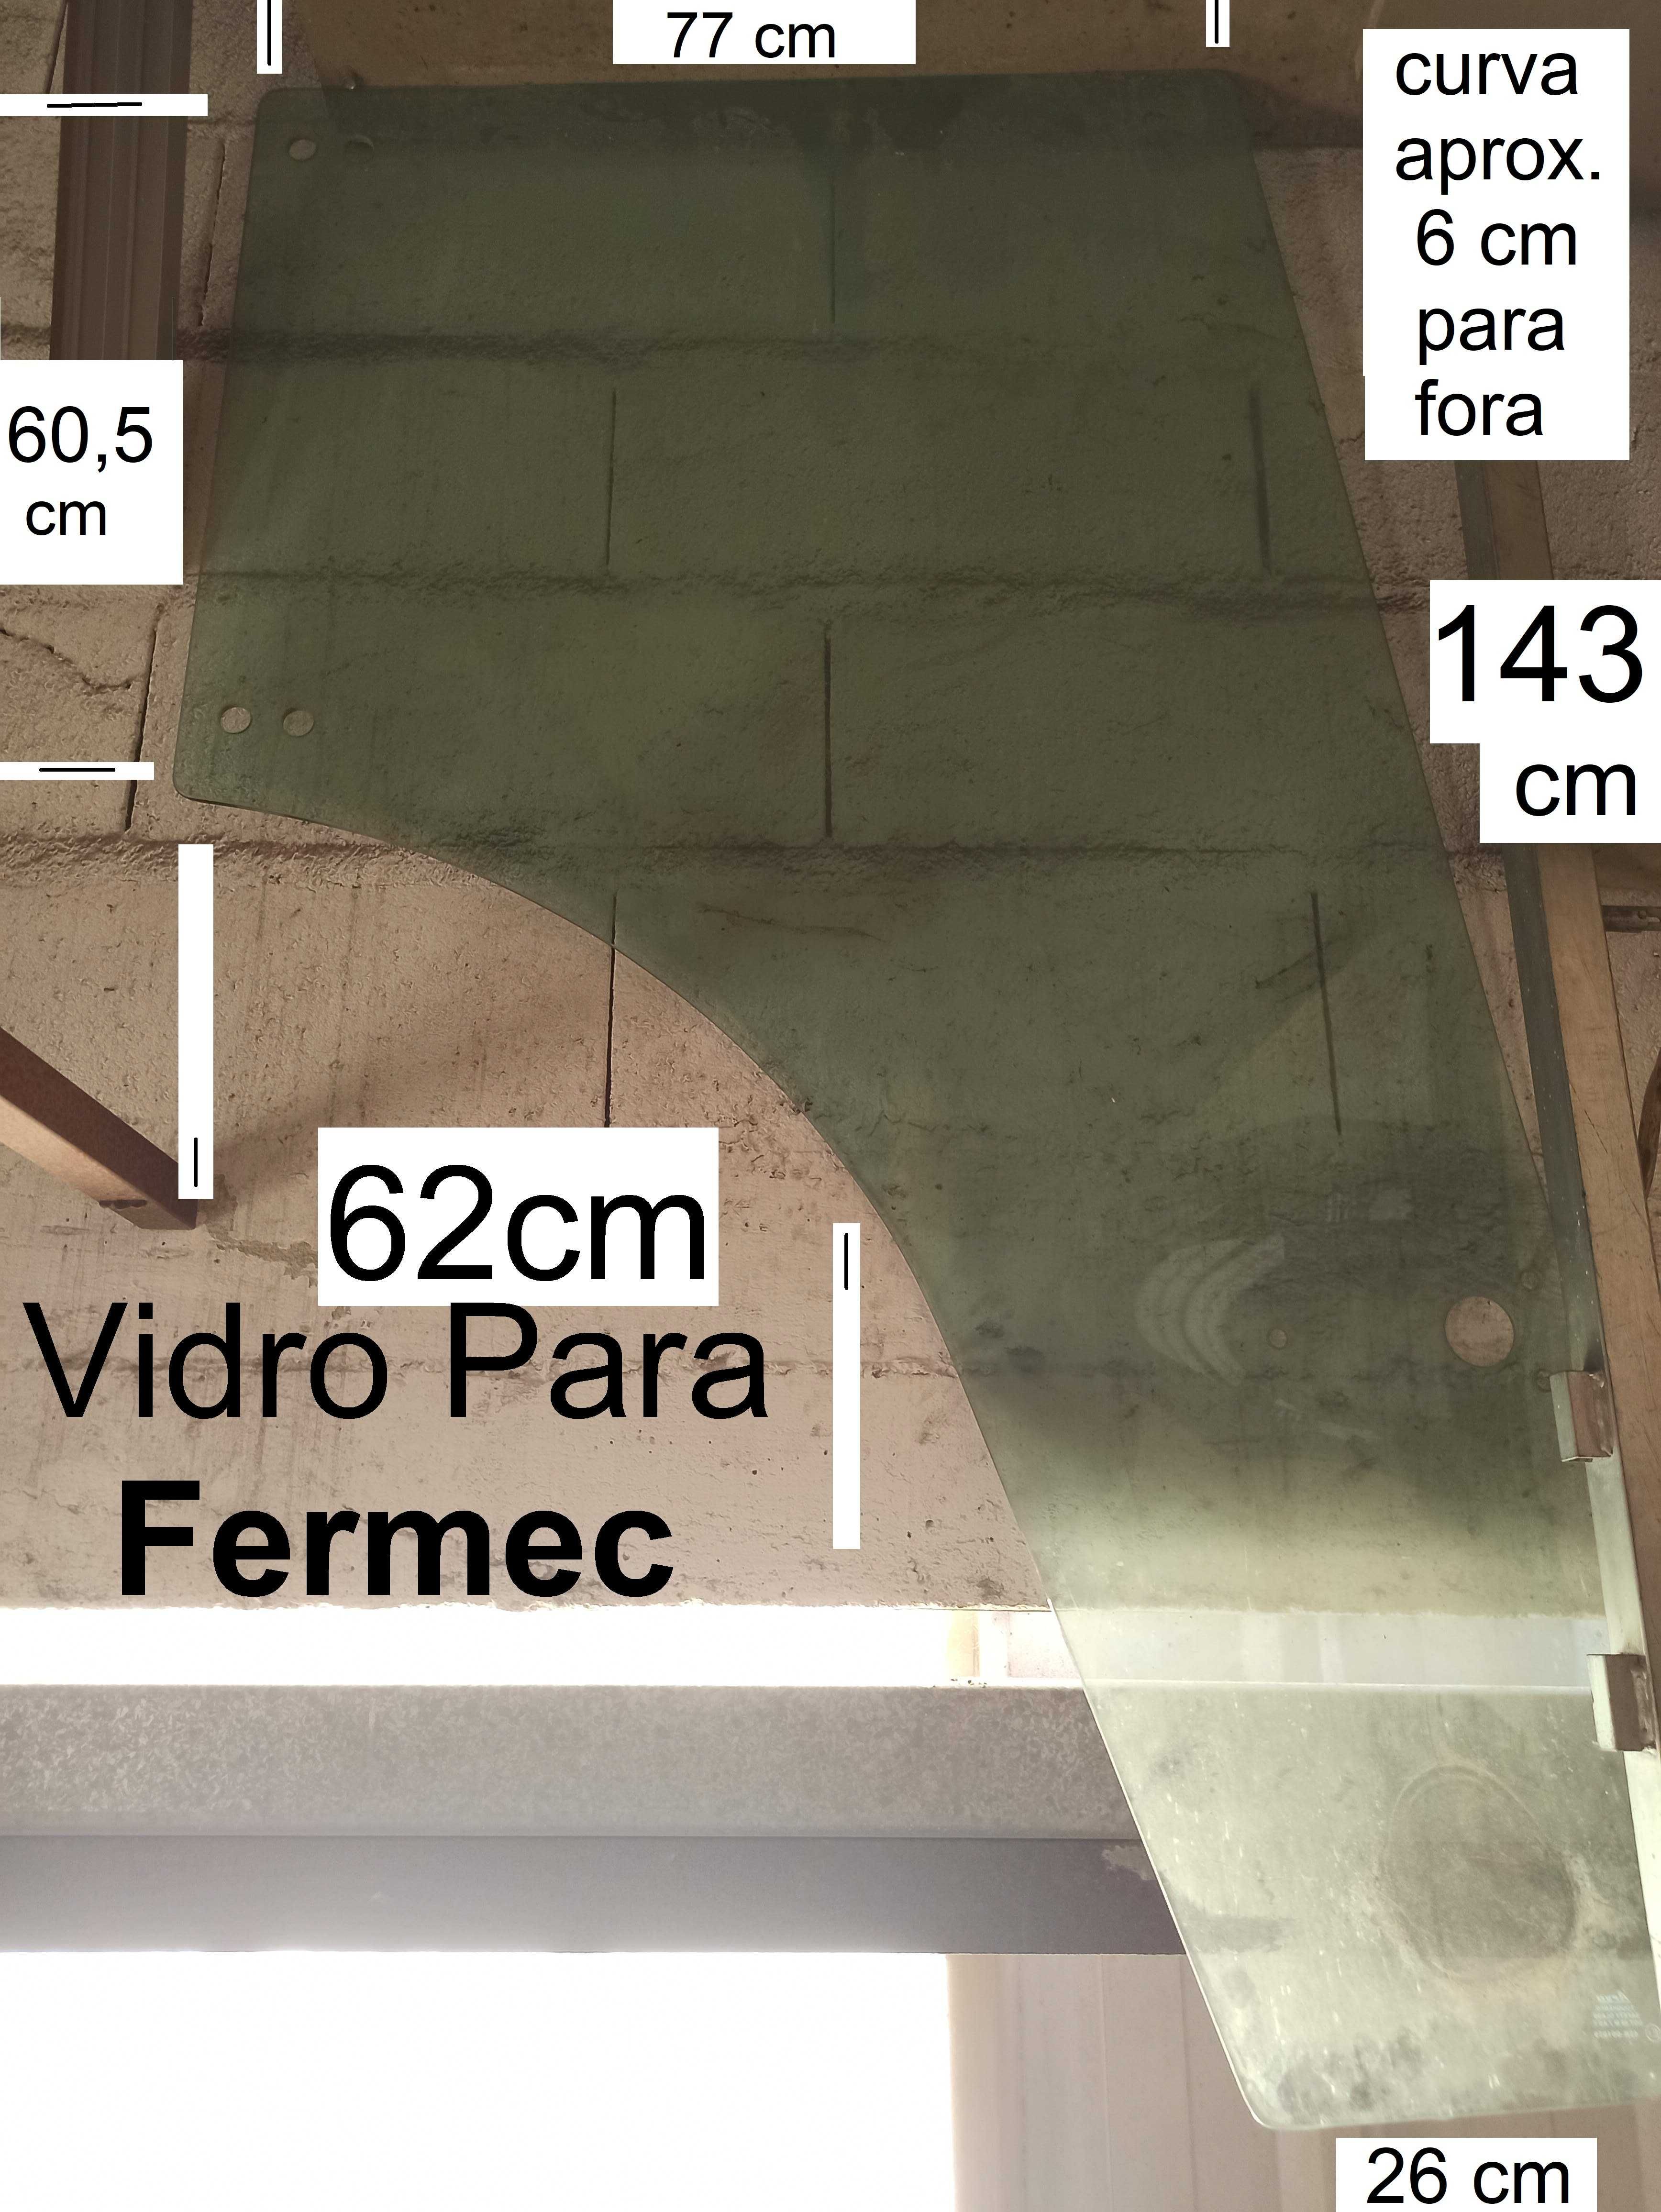 Vidro Retro Fermec porta lateral (medidas na foto)